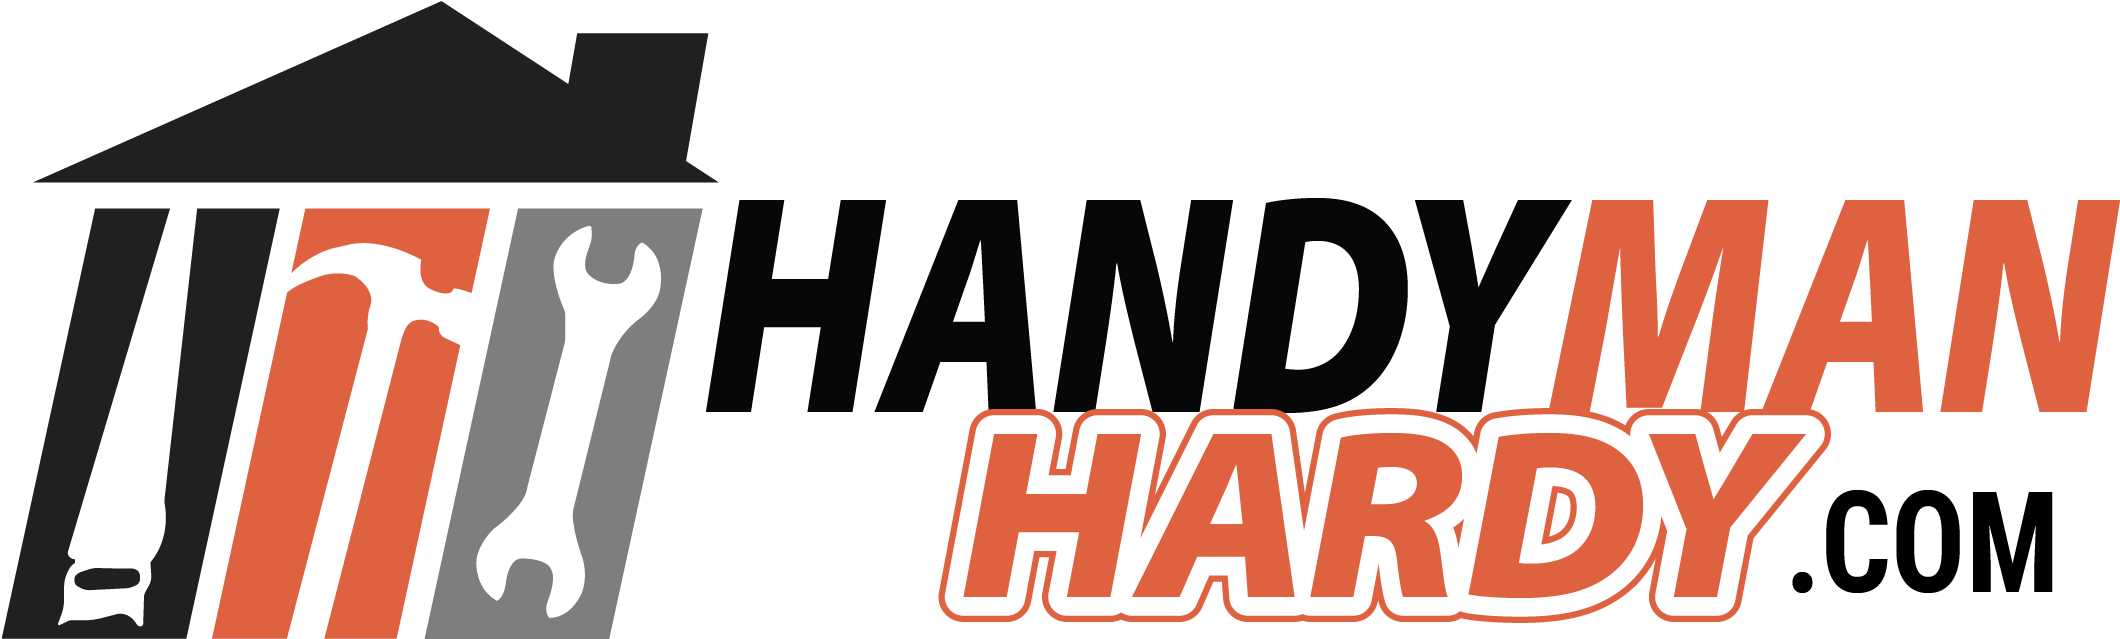 Handyman Hardy Logo PNG image